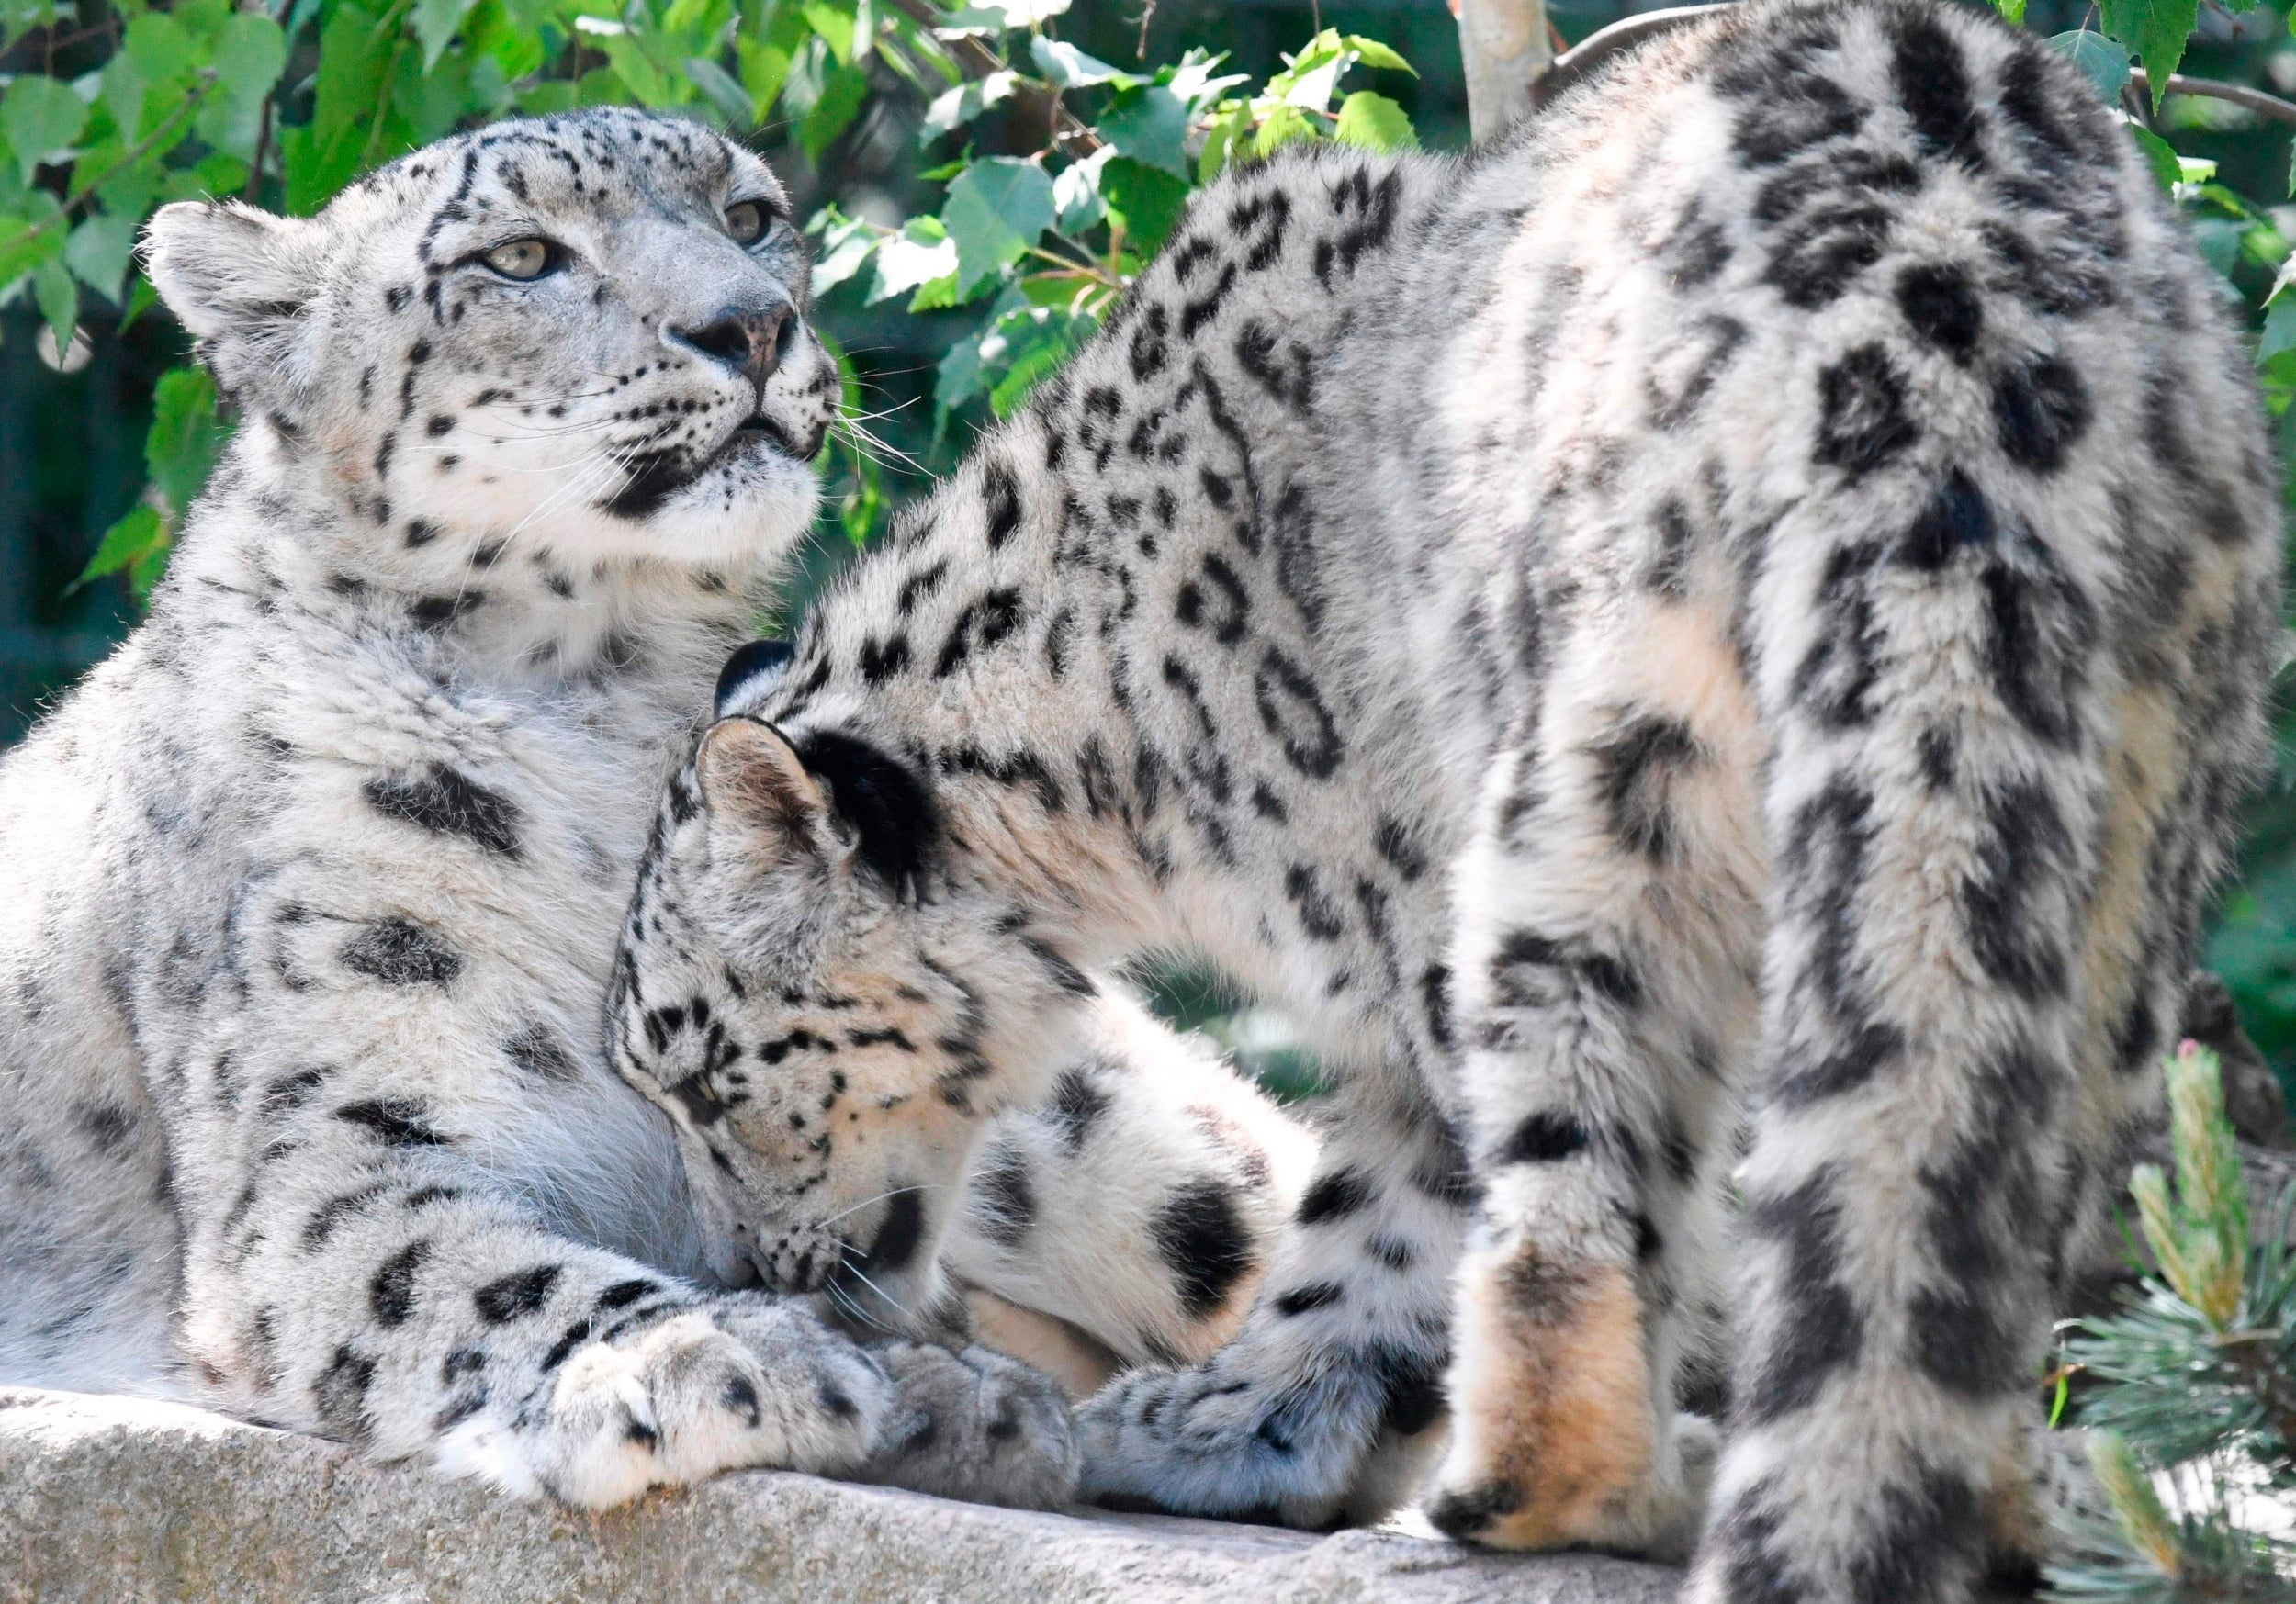 Snow leopards seen in Wilhelma botanical-zoological garden in Stuttgart, ten days after its reopening